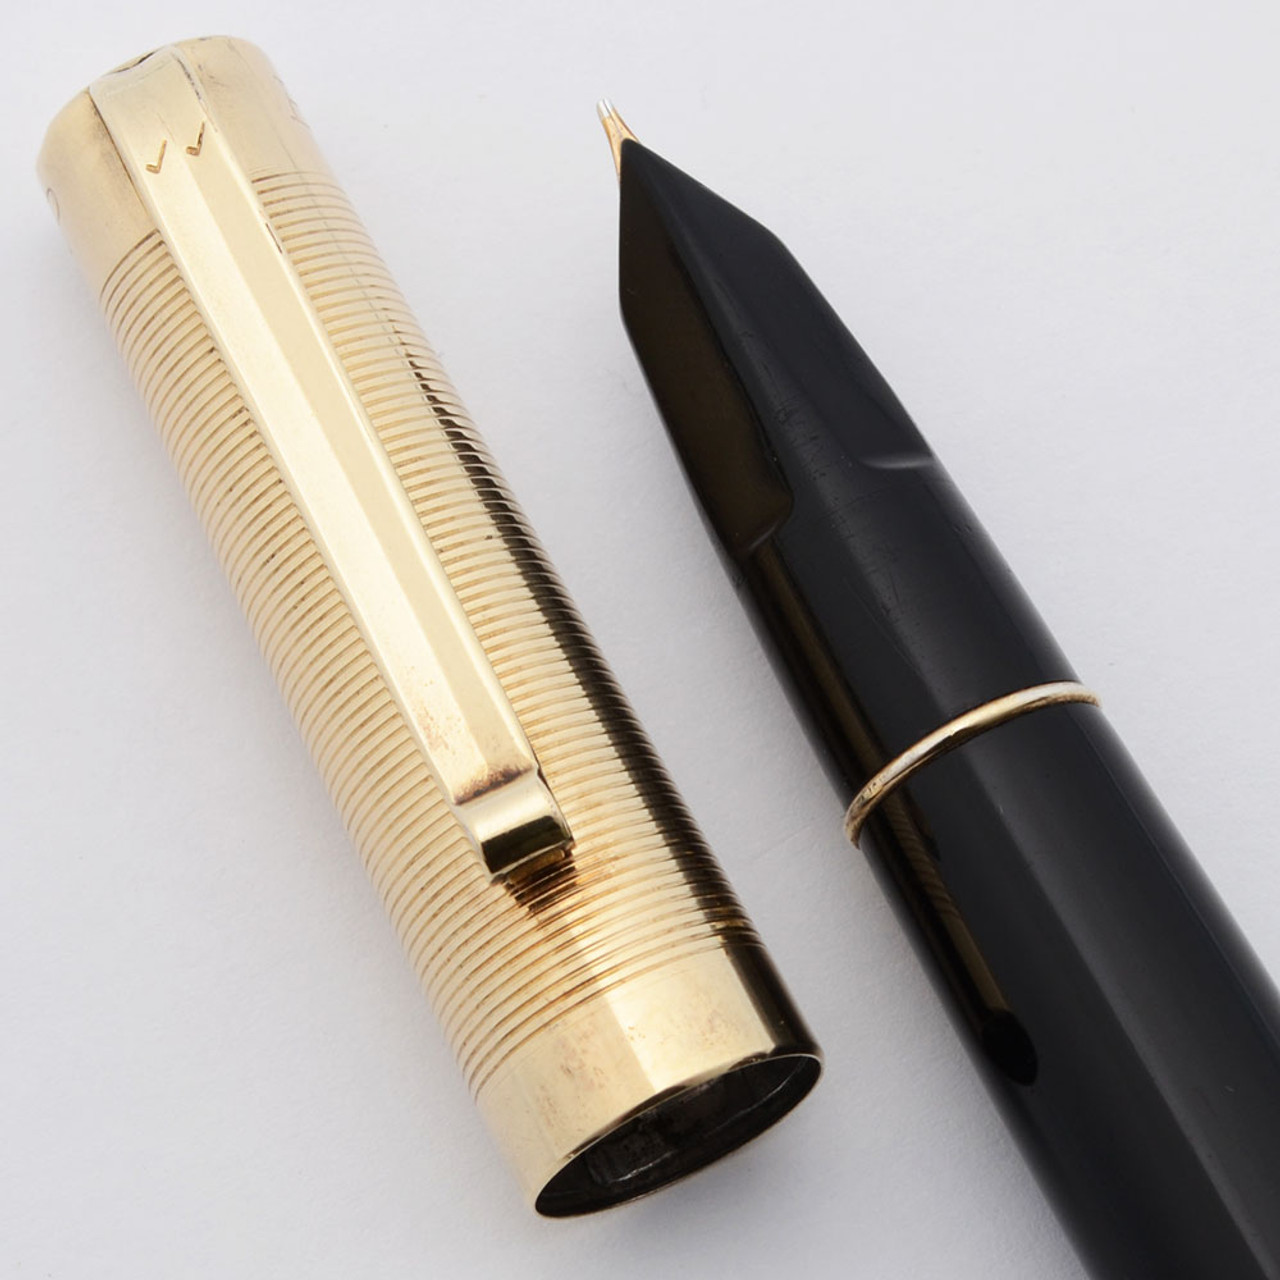 Eversharp Fifth Avenue Fountain Pen (1950s) - Full Size, Black Barrel, Gold  Cap, Lever Filler, Medium Nib (Excellent, Restored)